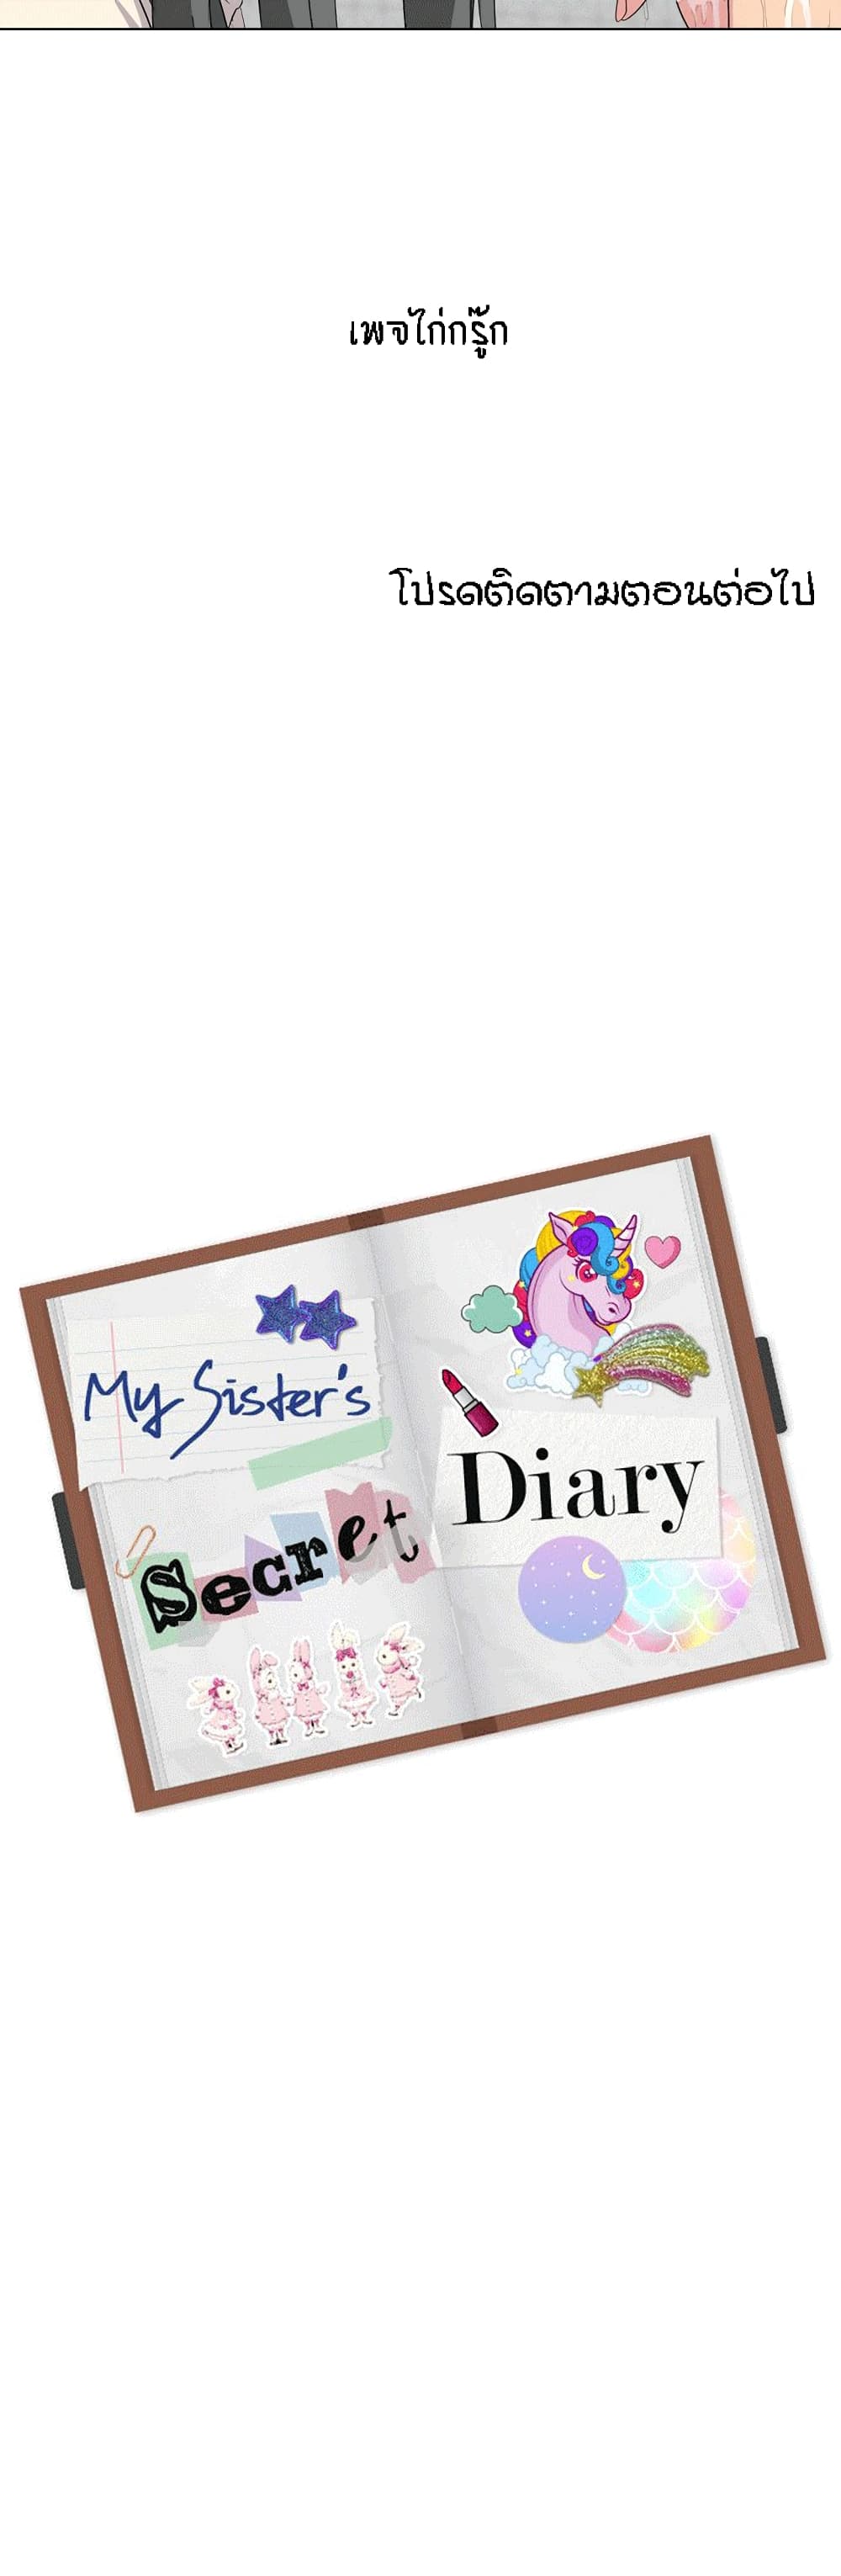 My Sister's Secret Diary 5-5